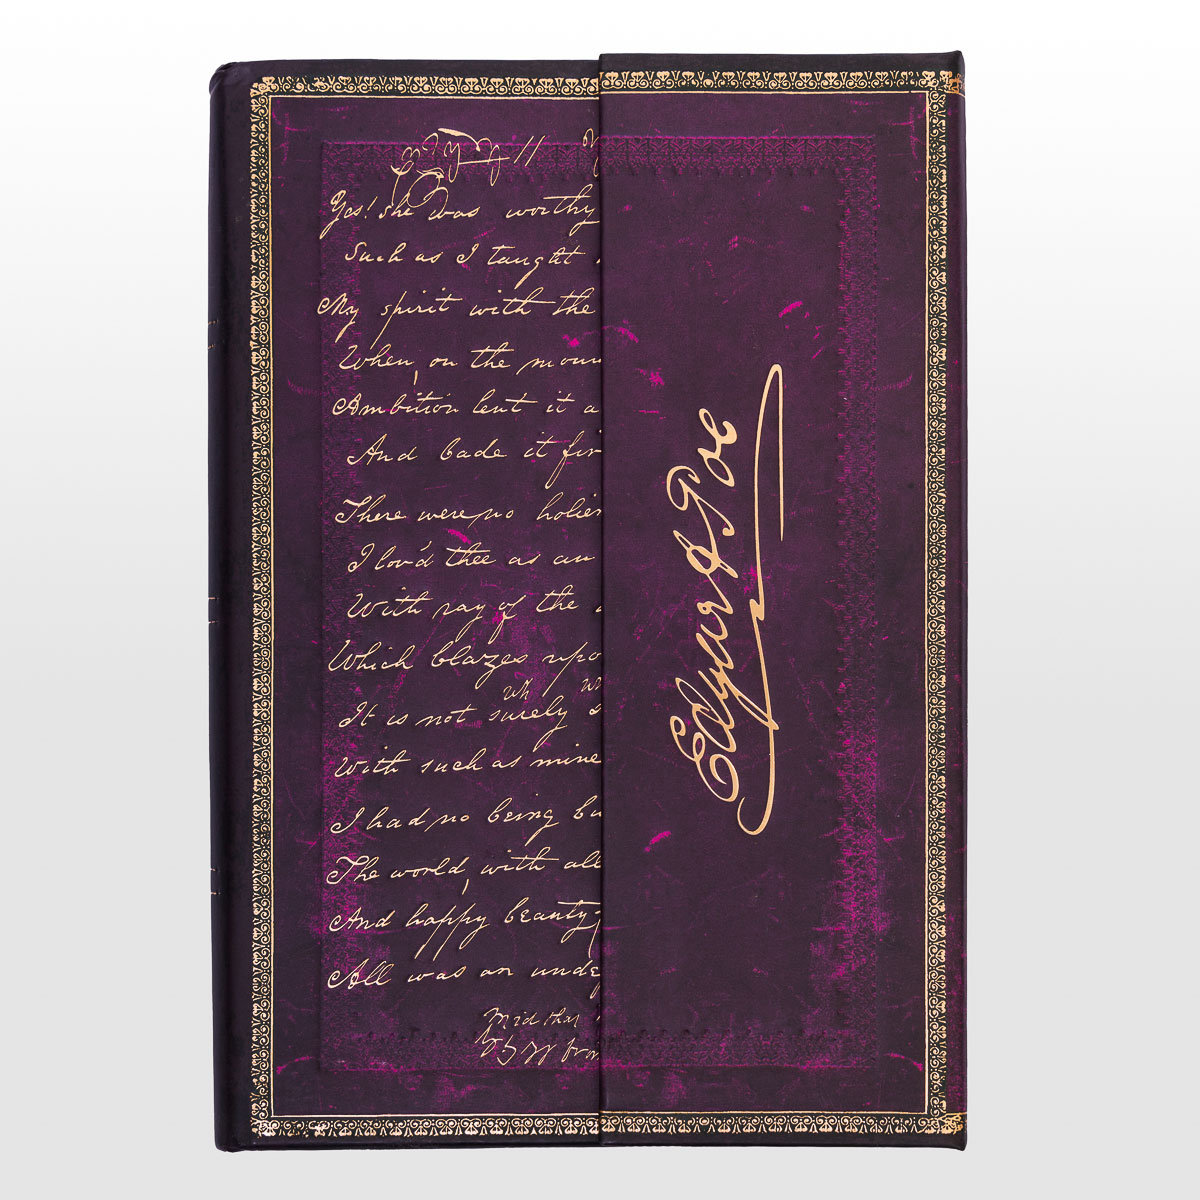 Paperblanks Address book - Edgar Allan Poe, Tamerlane - MINI